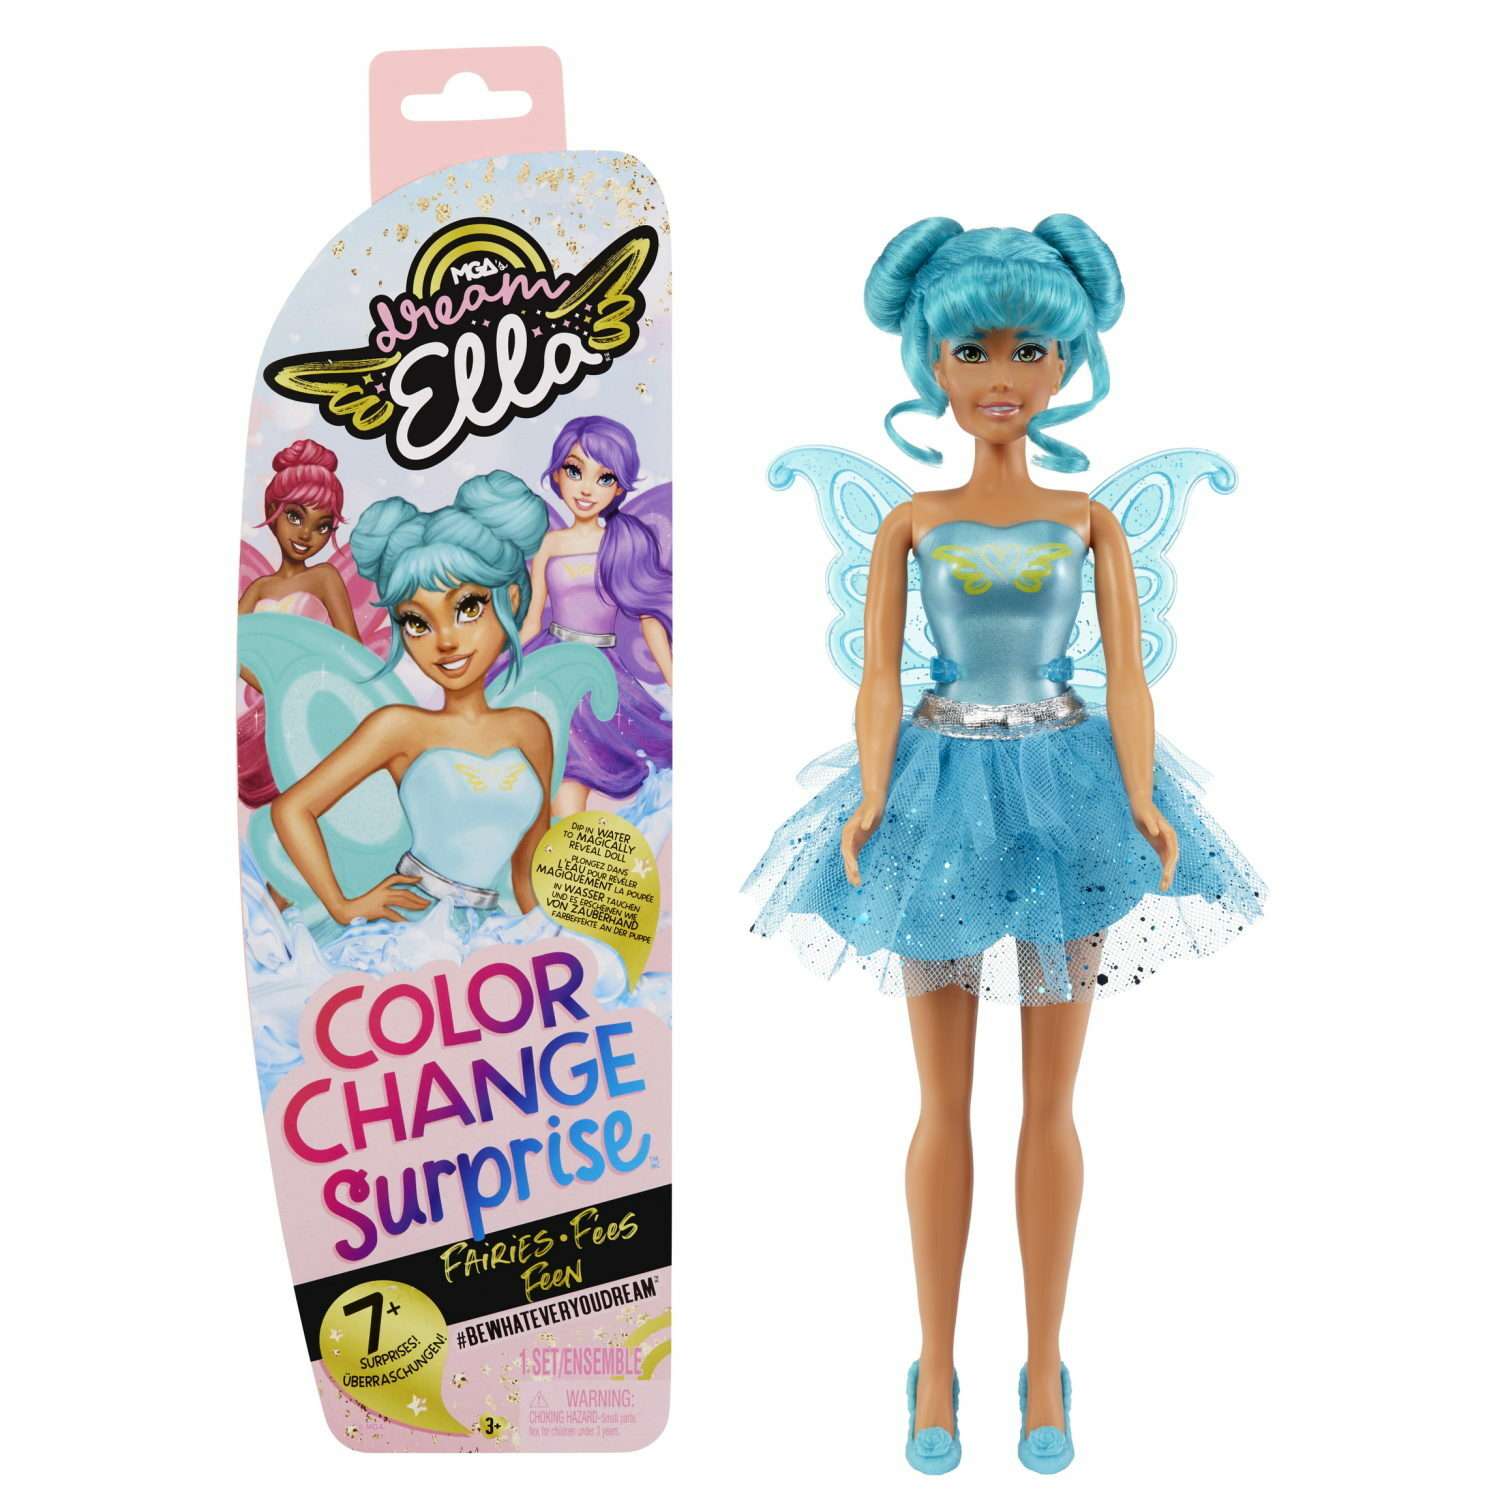 Кукла-сюрприз MGA Dream Ella меняющая цвет Teal 582397 - фото 2